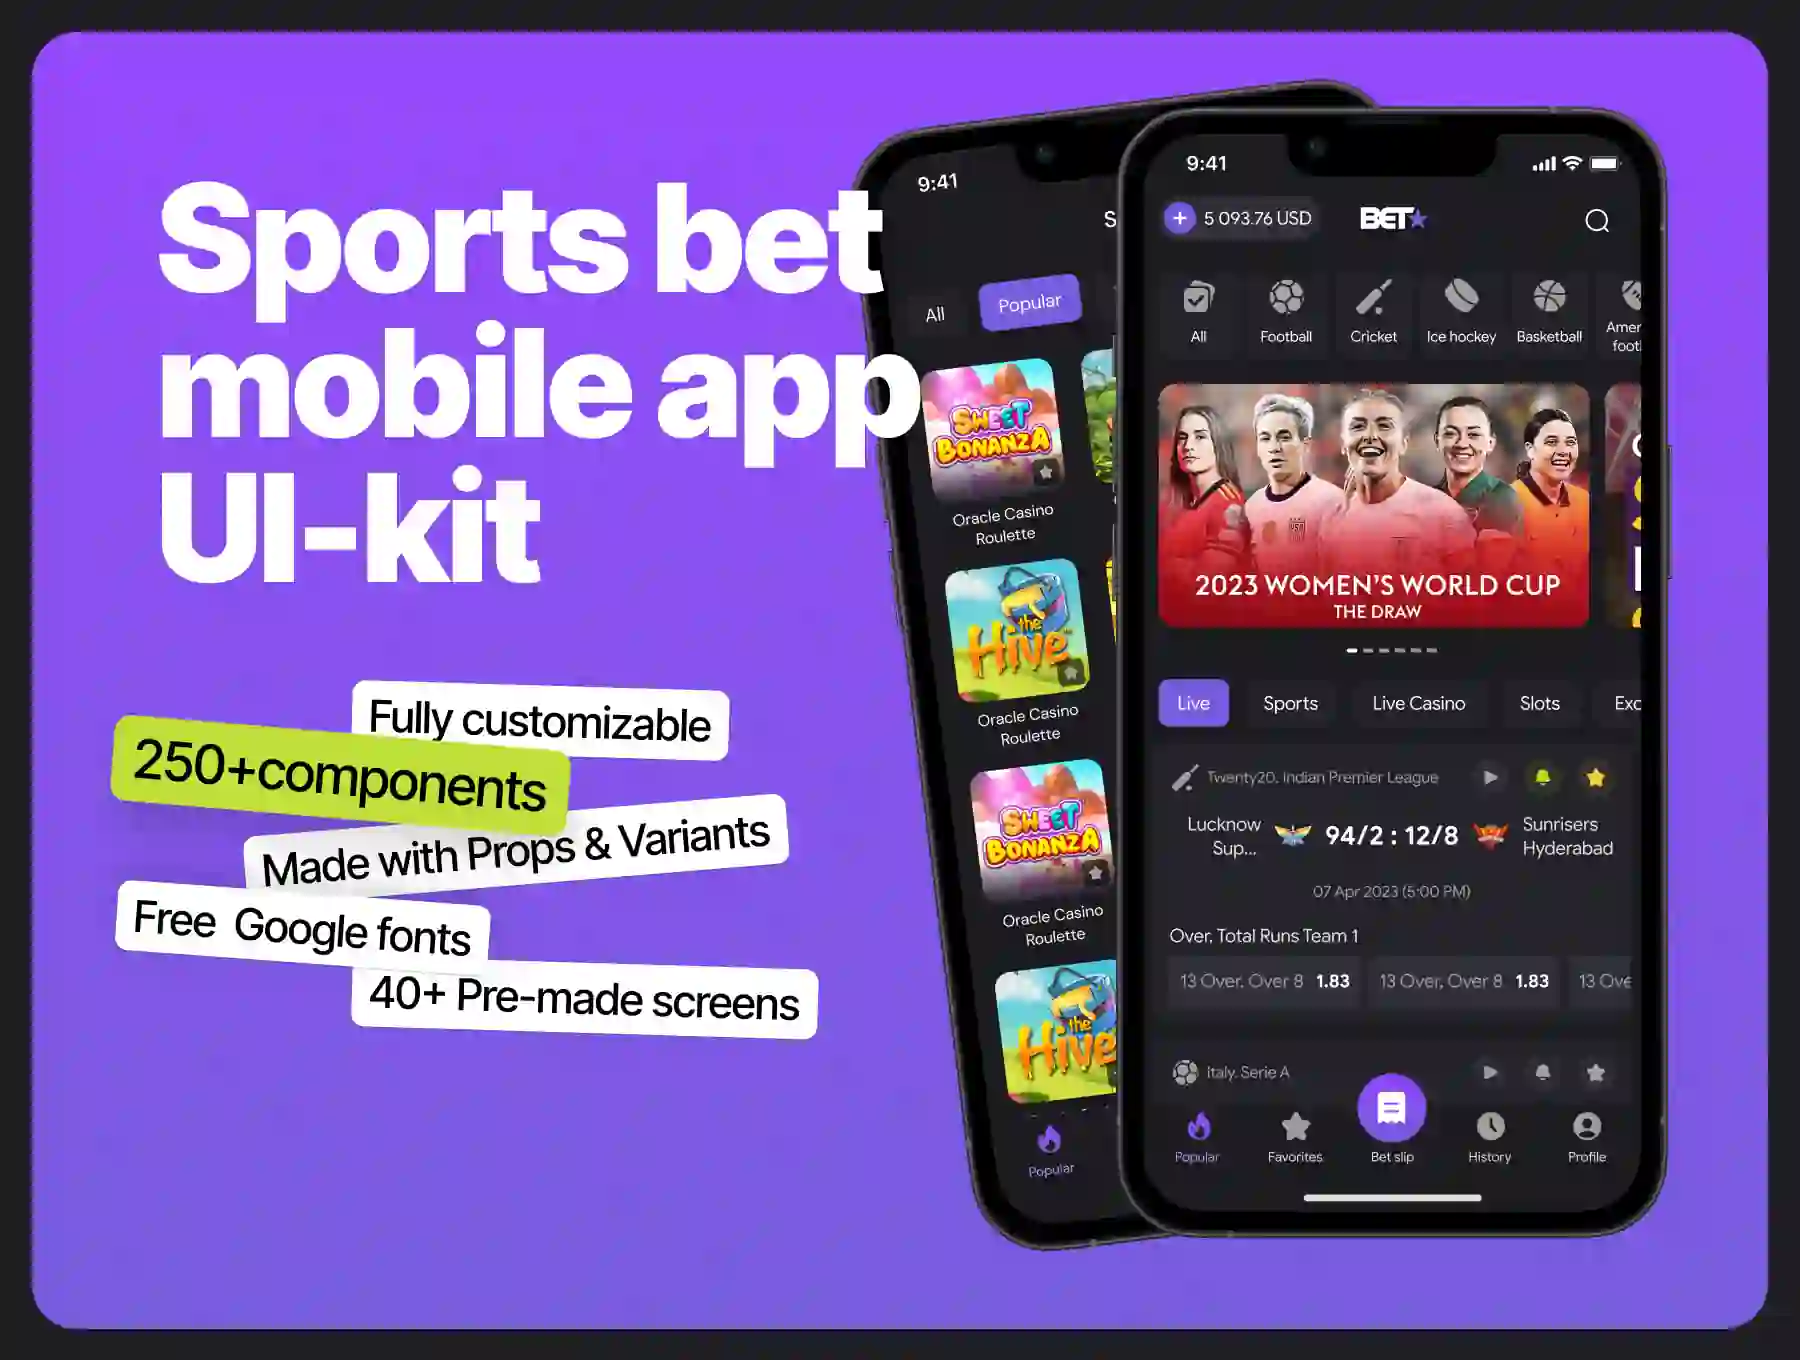 Sports bet mobile app UI Kit